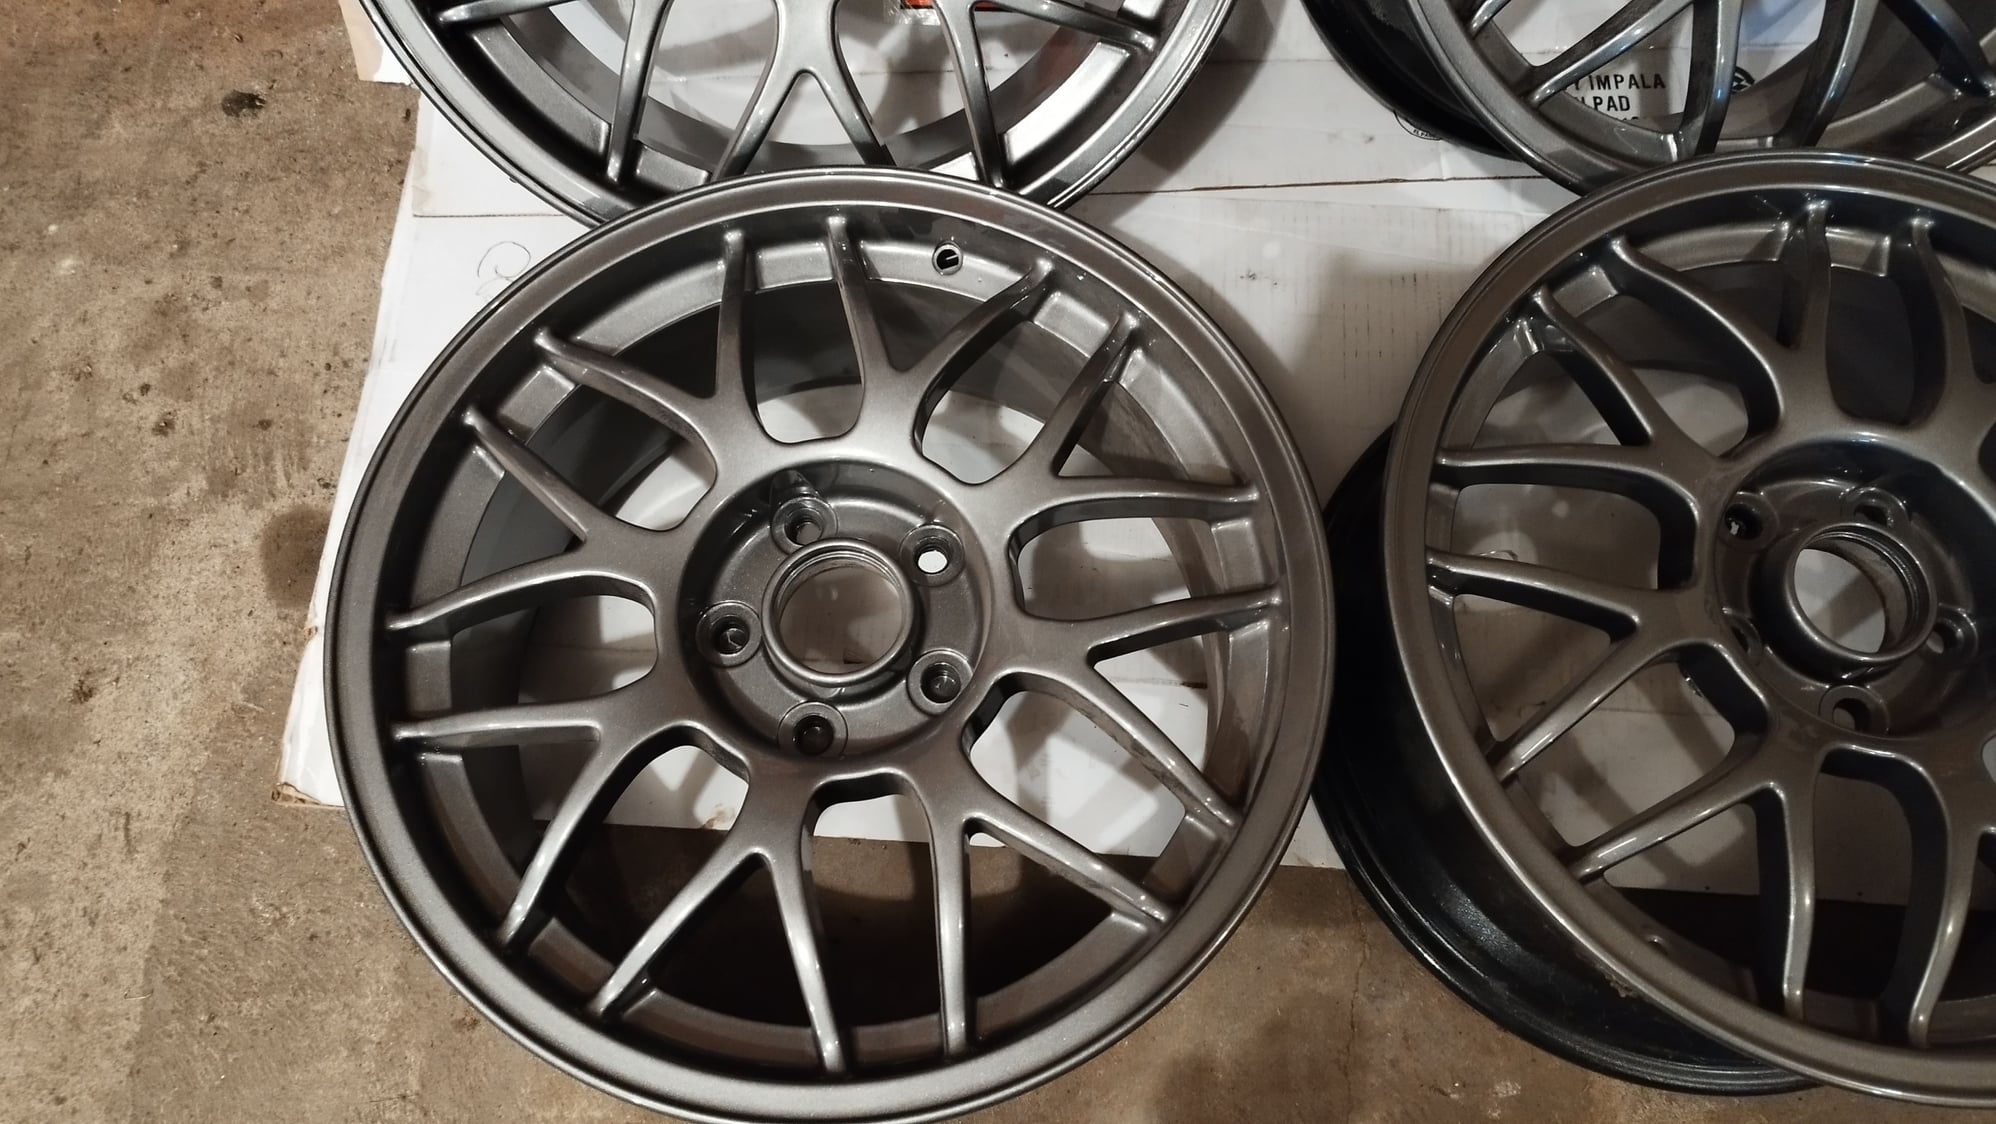 Wheels and Tires/Axles - Series 8 OEM RZ Rims - Used - Ionia, MI 48846, United States